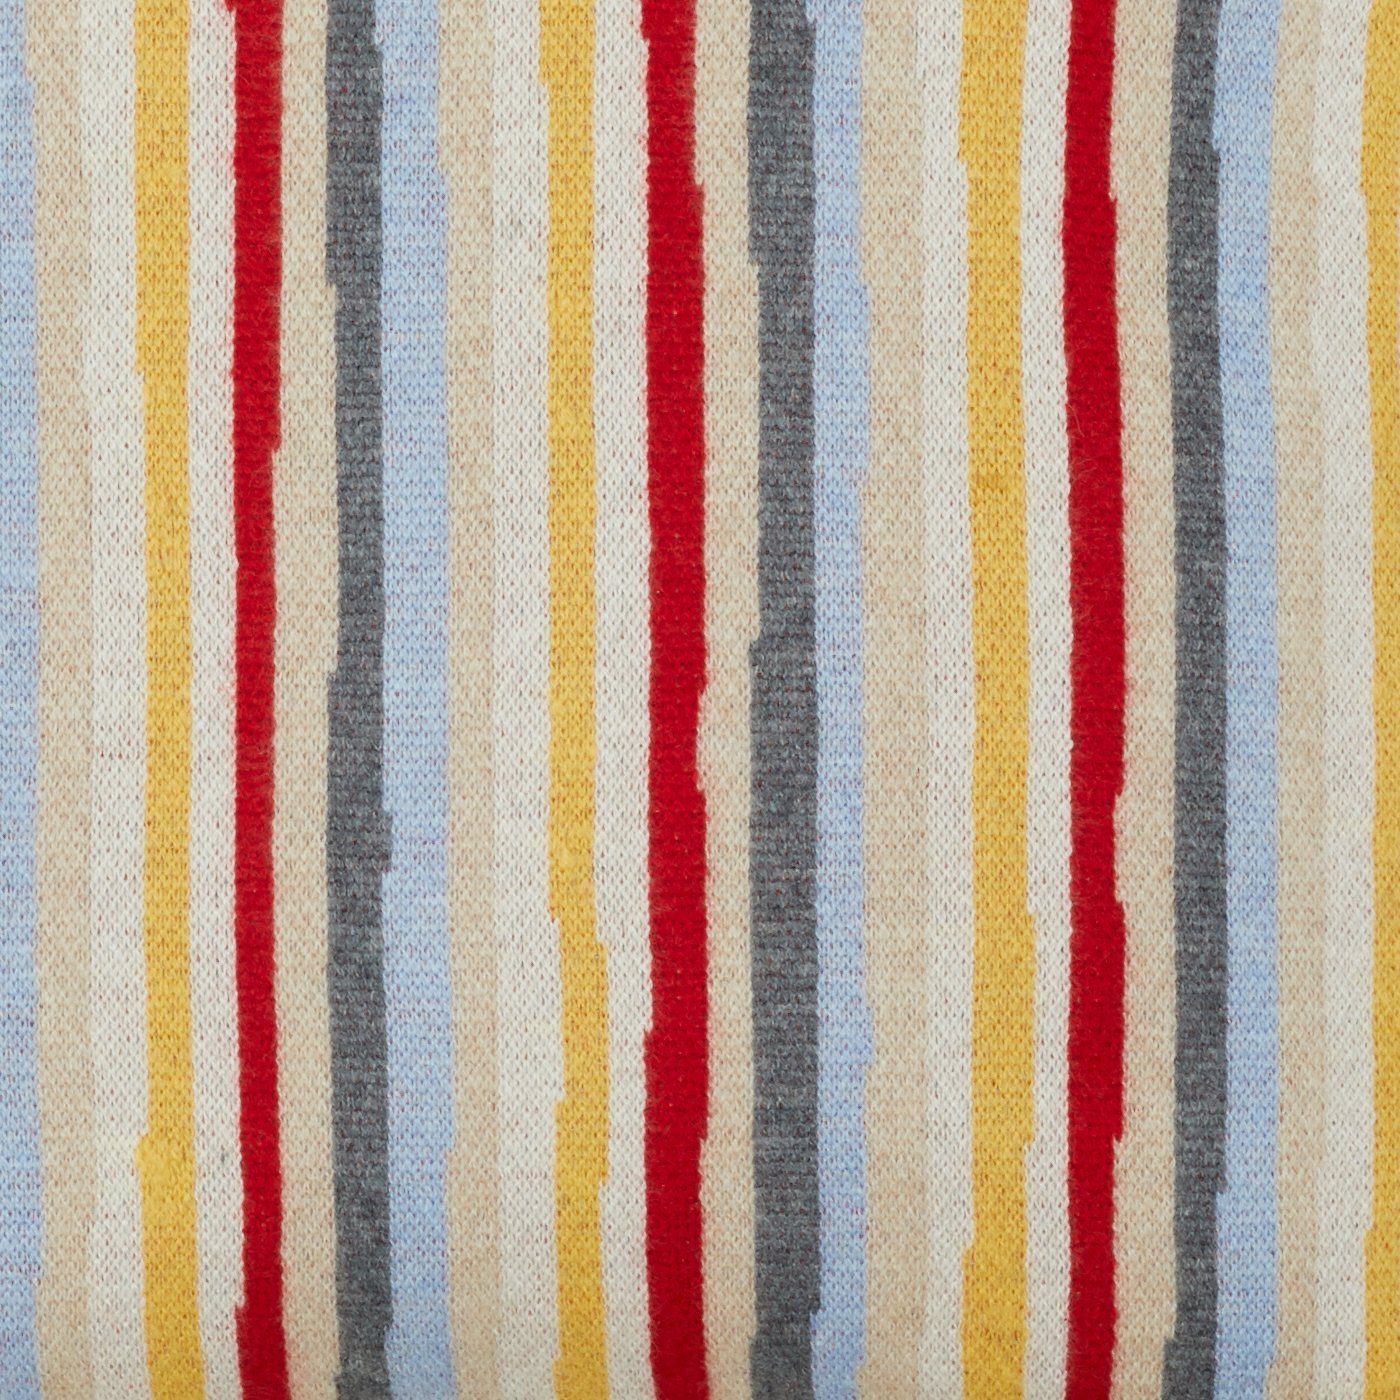 Cashmere Pillow - Shaker Stripes